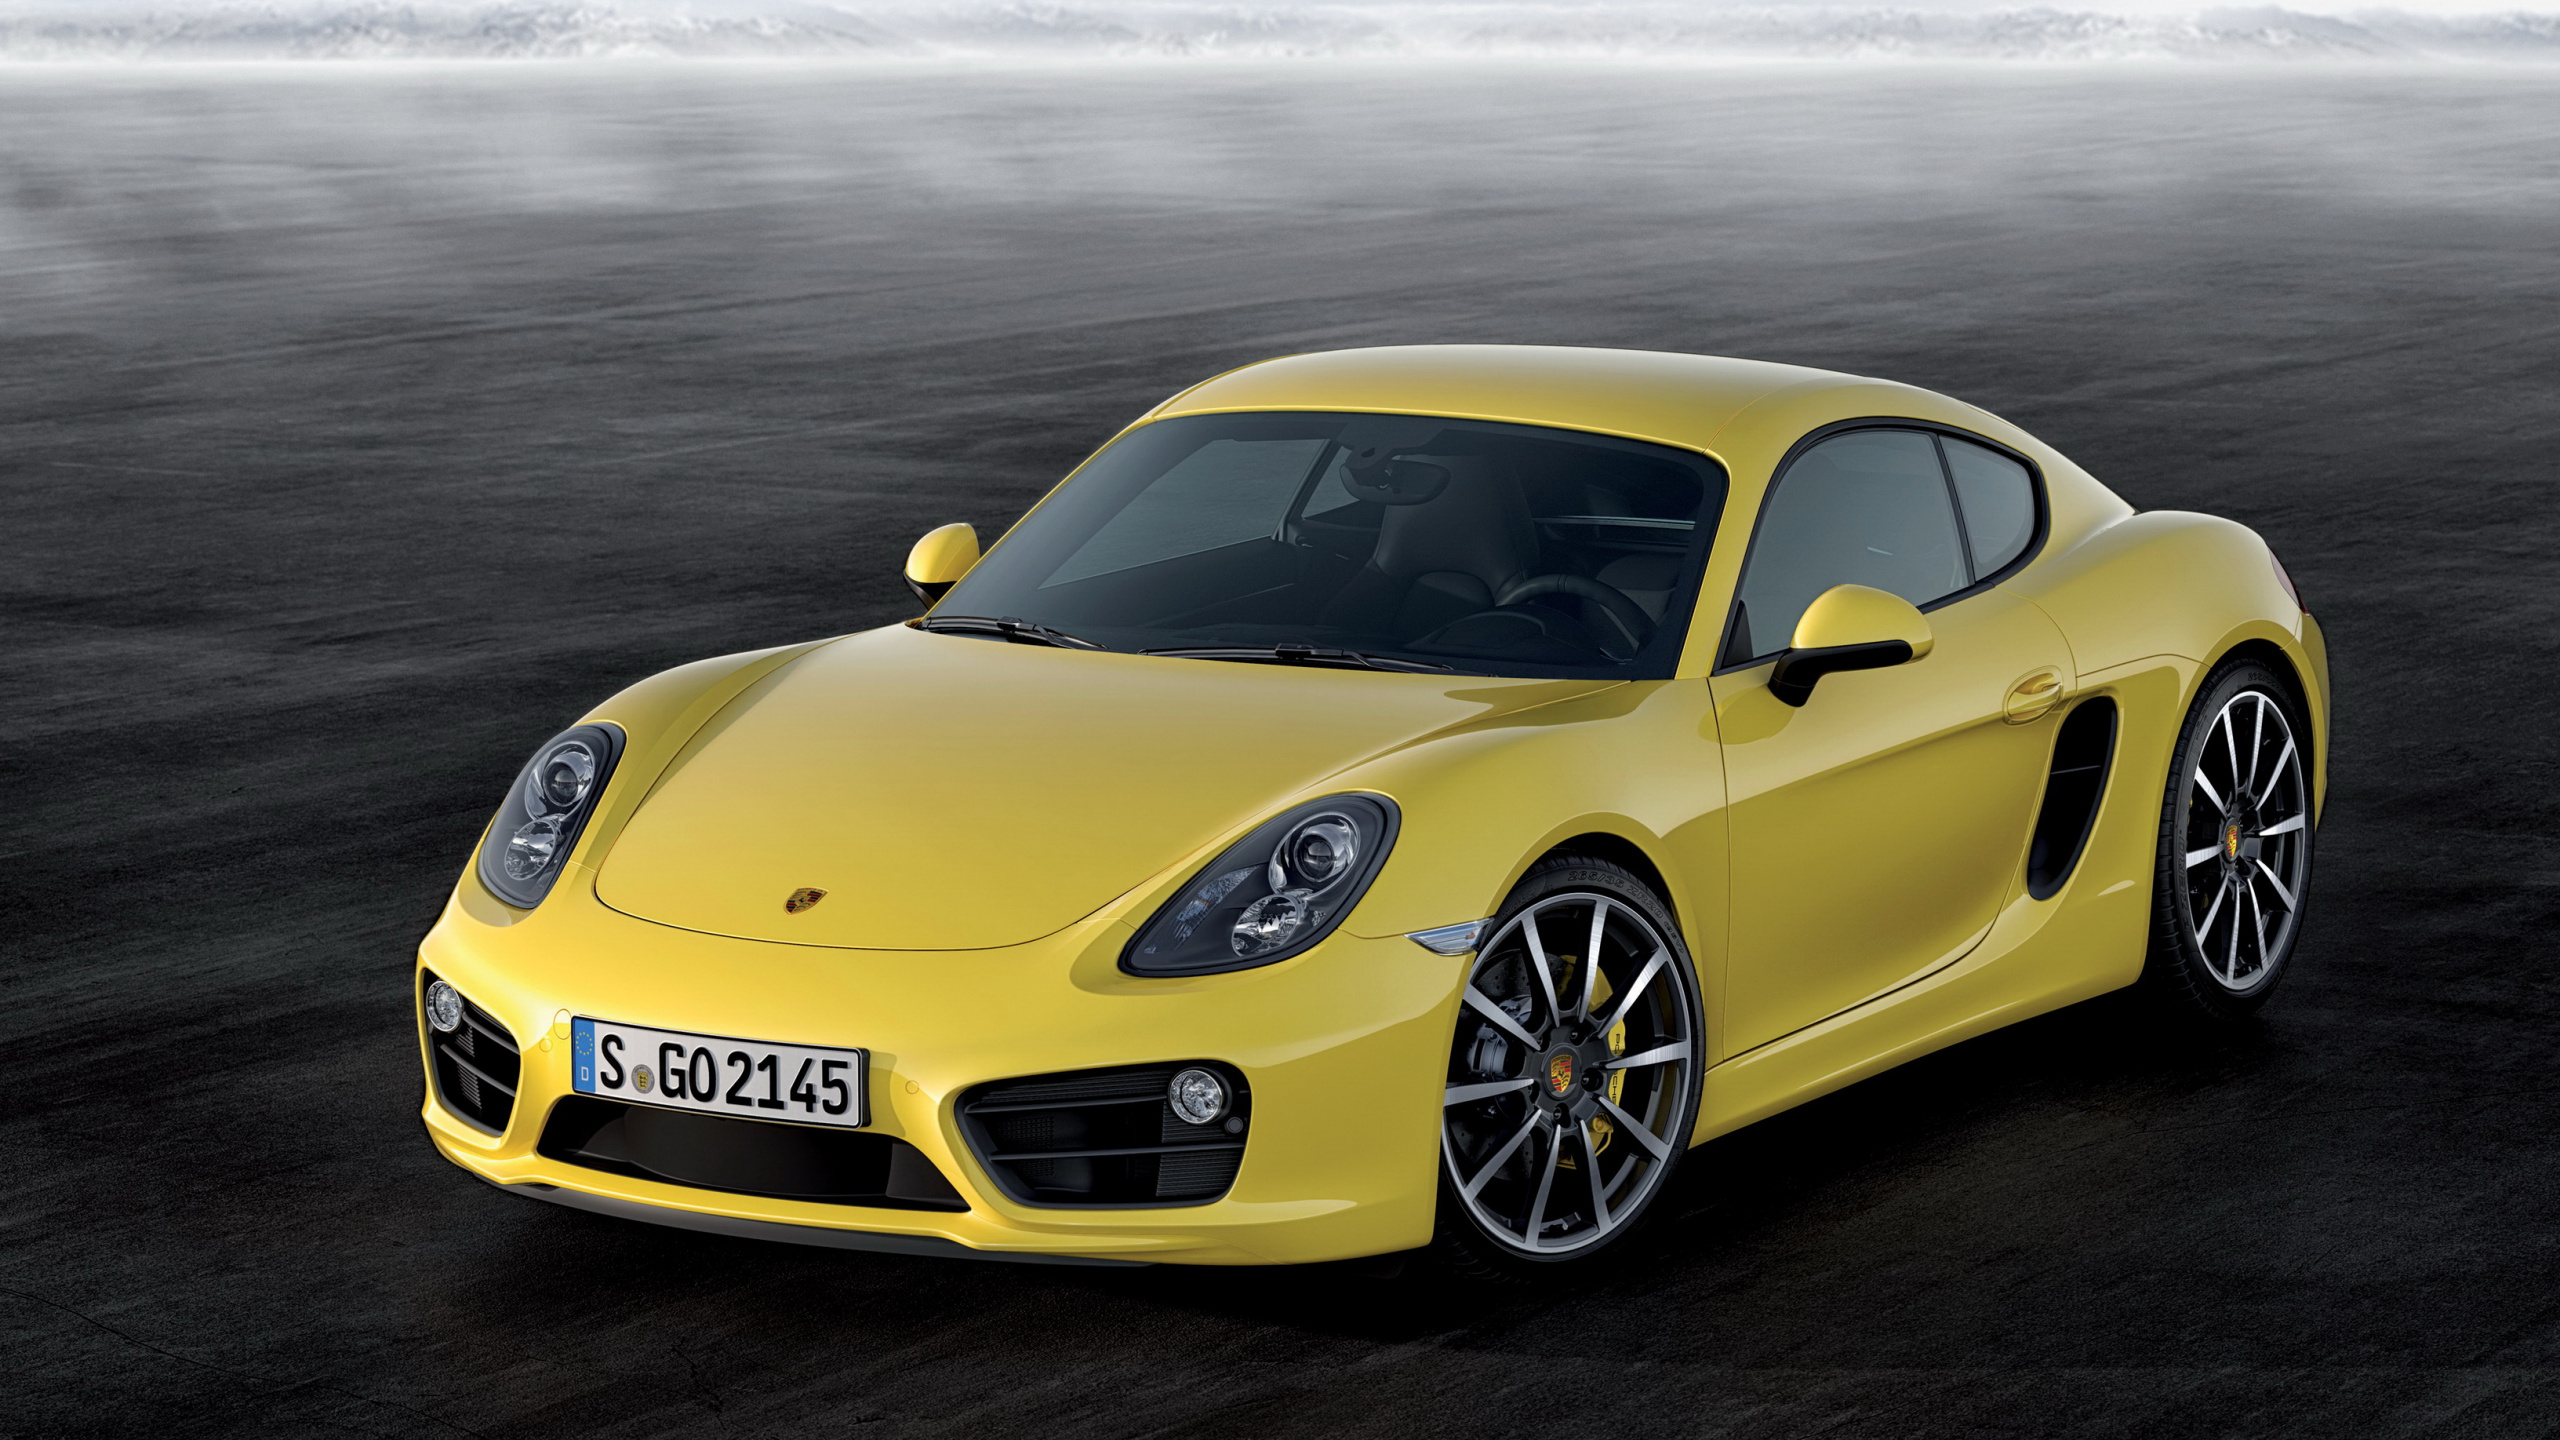 Yellow Porsche 911 on Beach Shore. Wallpaper in 2560x1440 Resolution